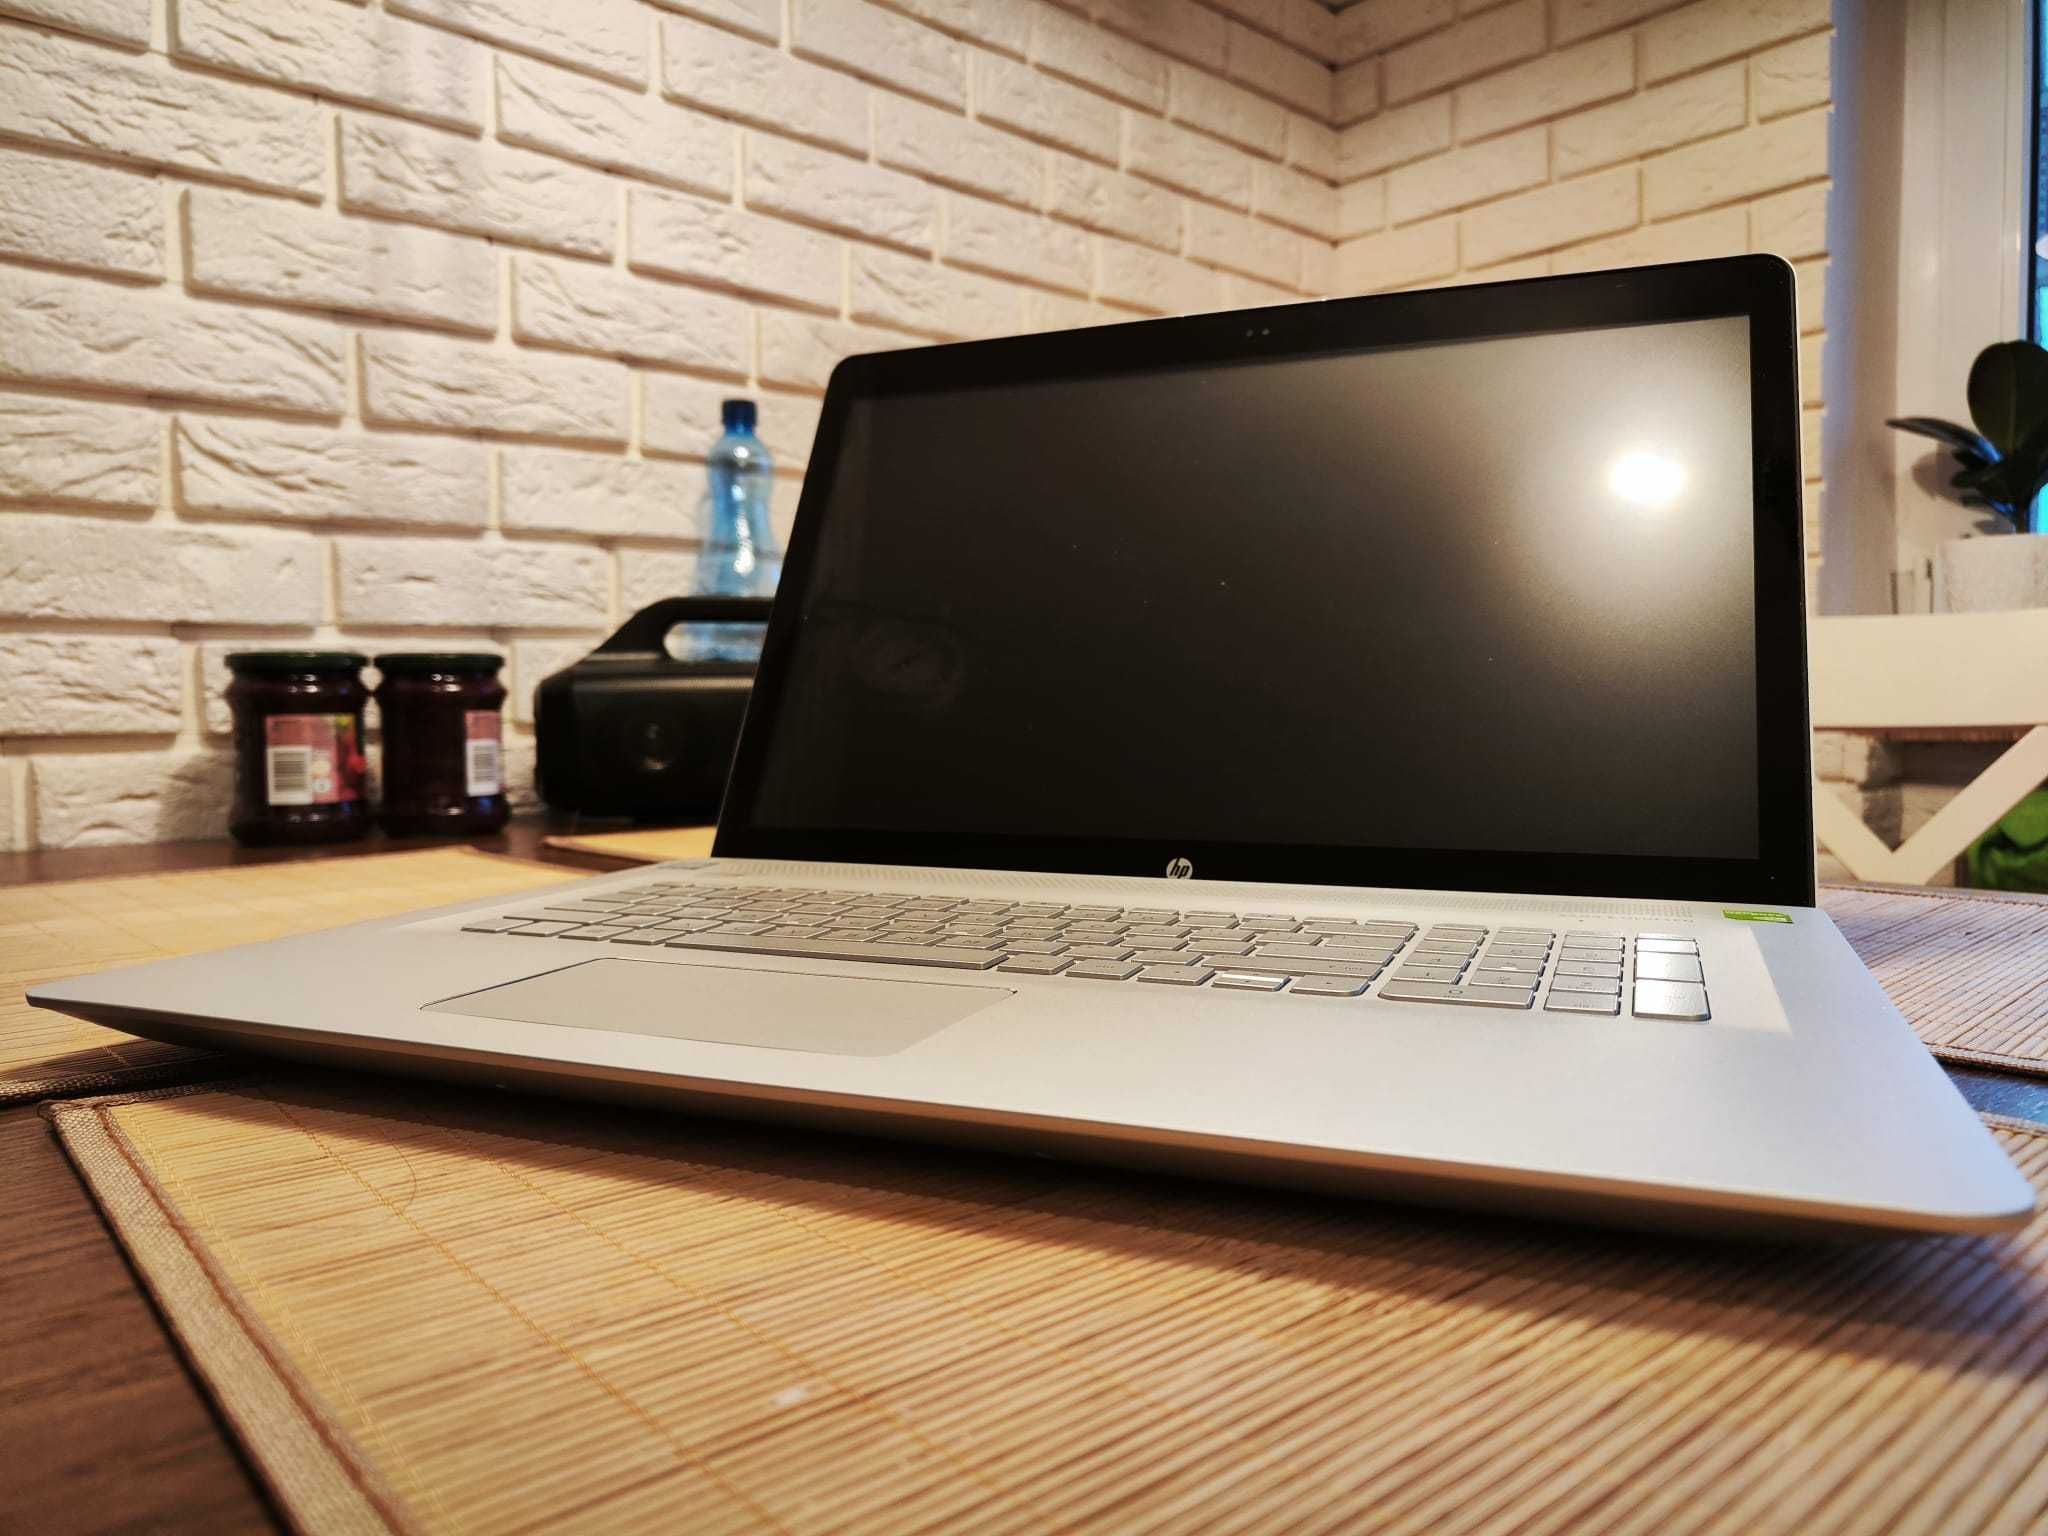 Laptop HP Envy 17" Bang Olufsen i7 16GB 240SSD GeForce MX150